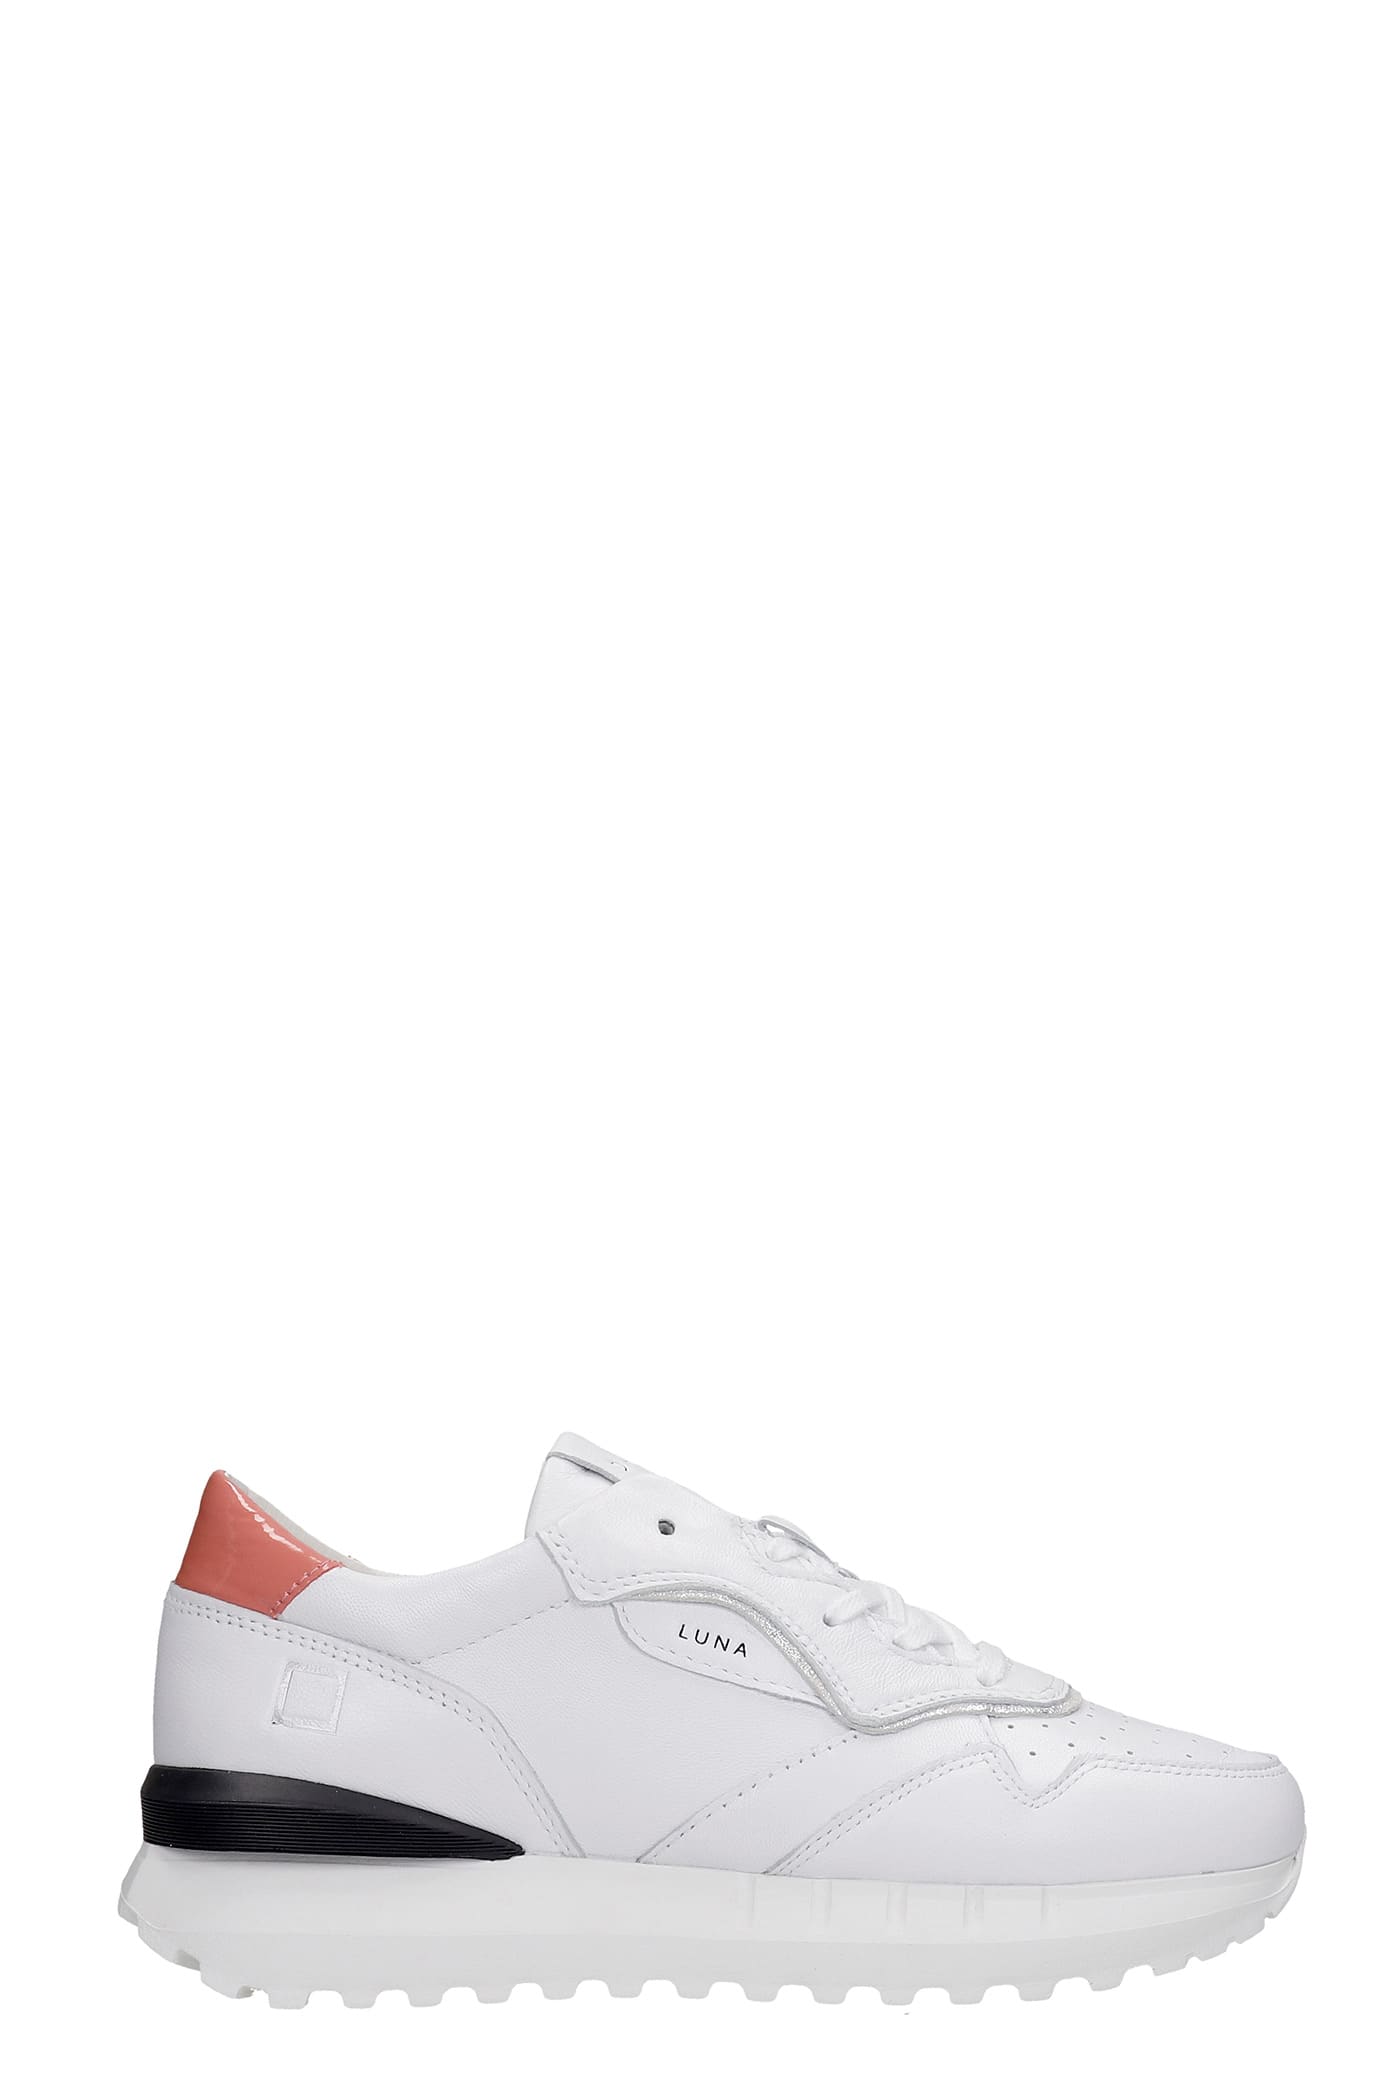 D.A.T.E. Luna Sneakers In White Leather